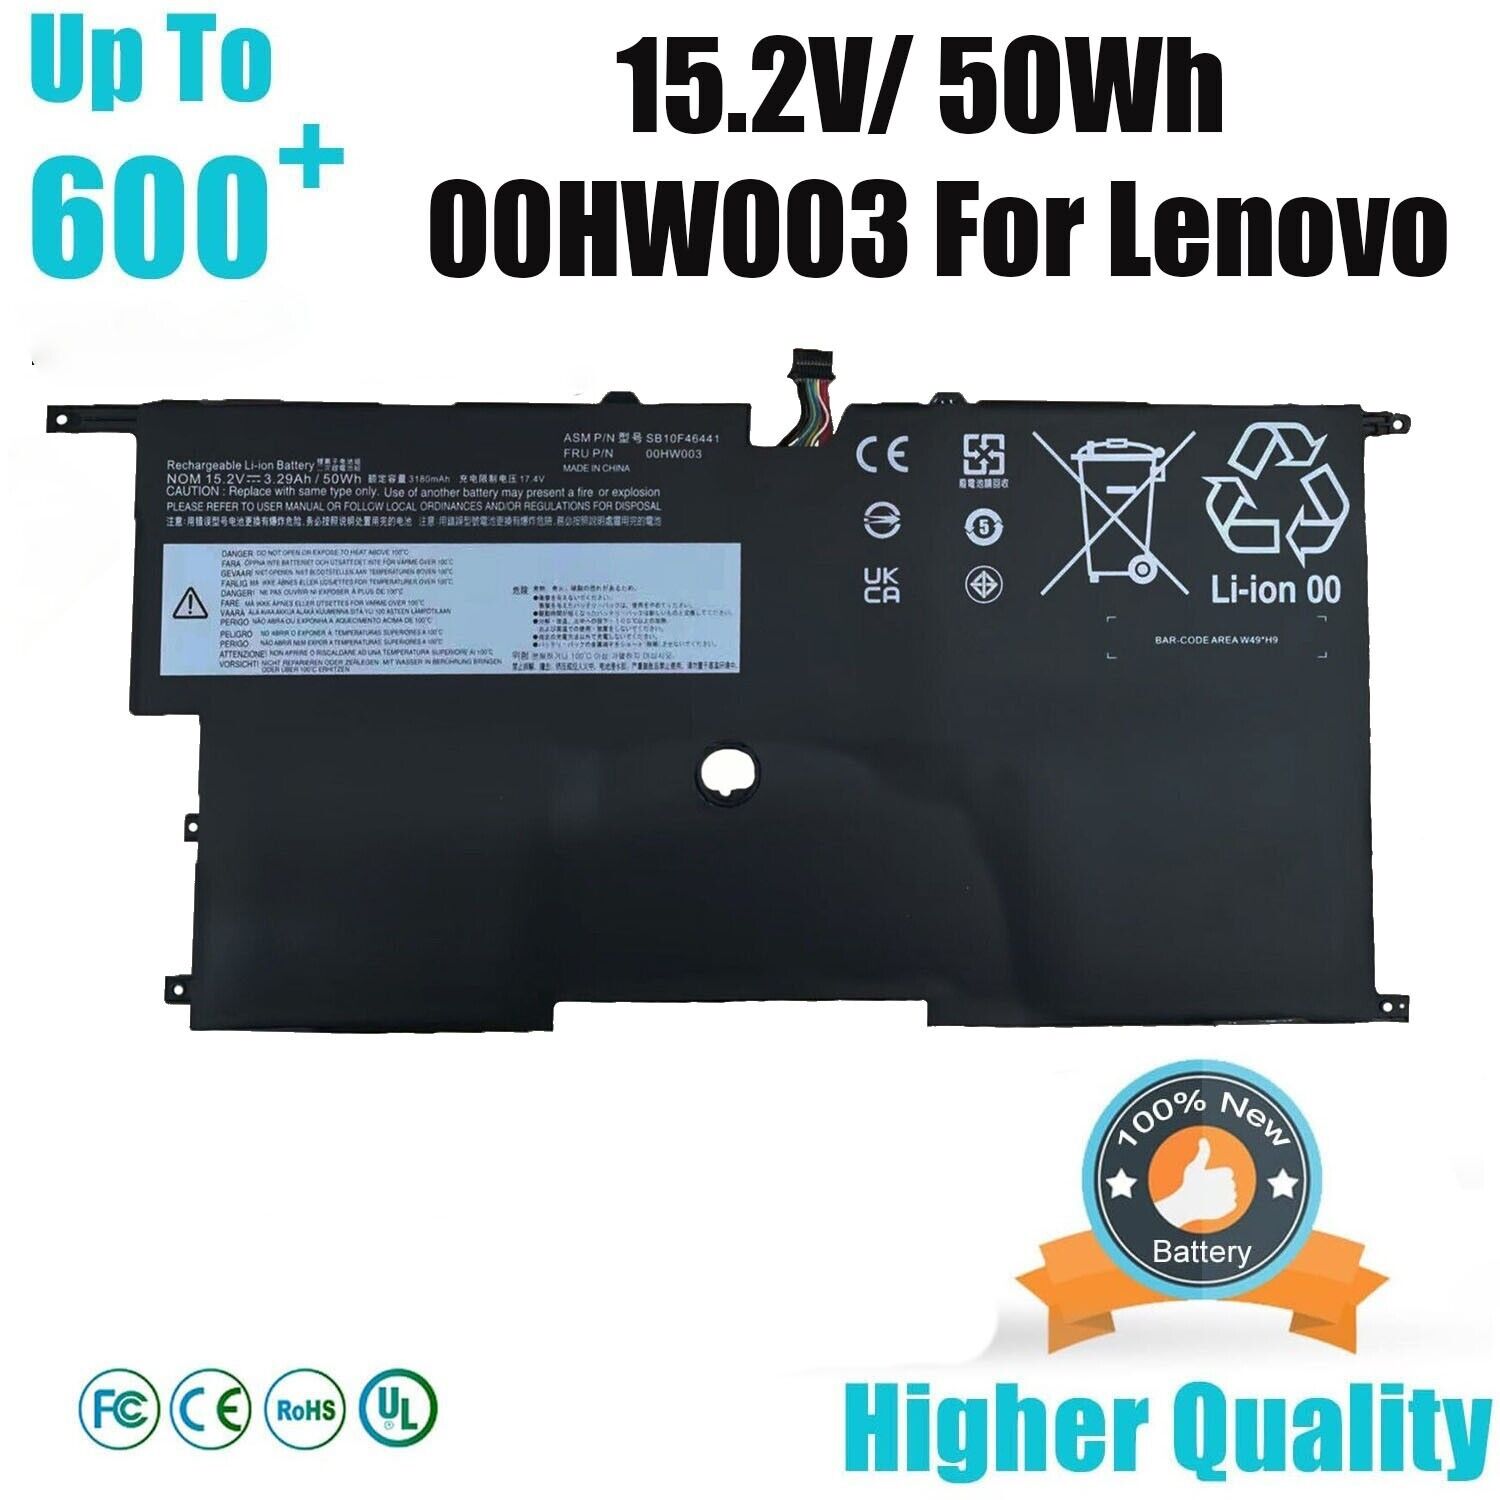 NEW 50Wh 00HW003 00HW002 Battery For Lenovo ThinkPad X1 Carbon Gen 3 Series 2015